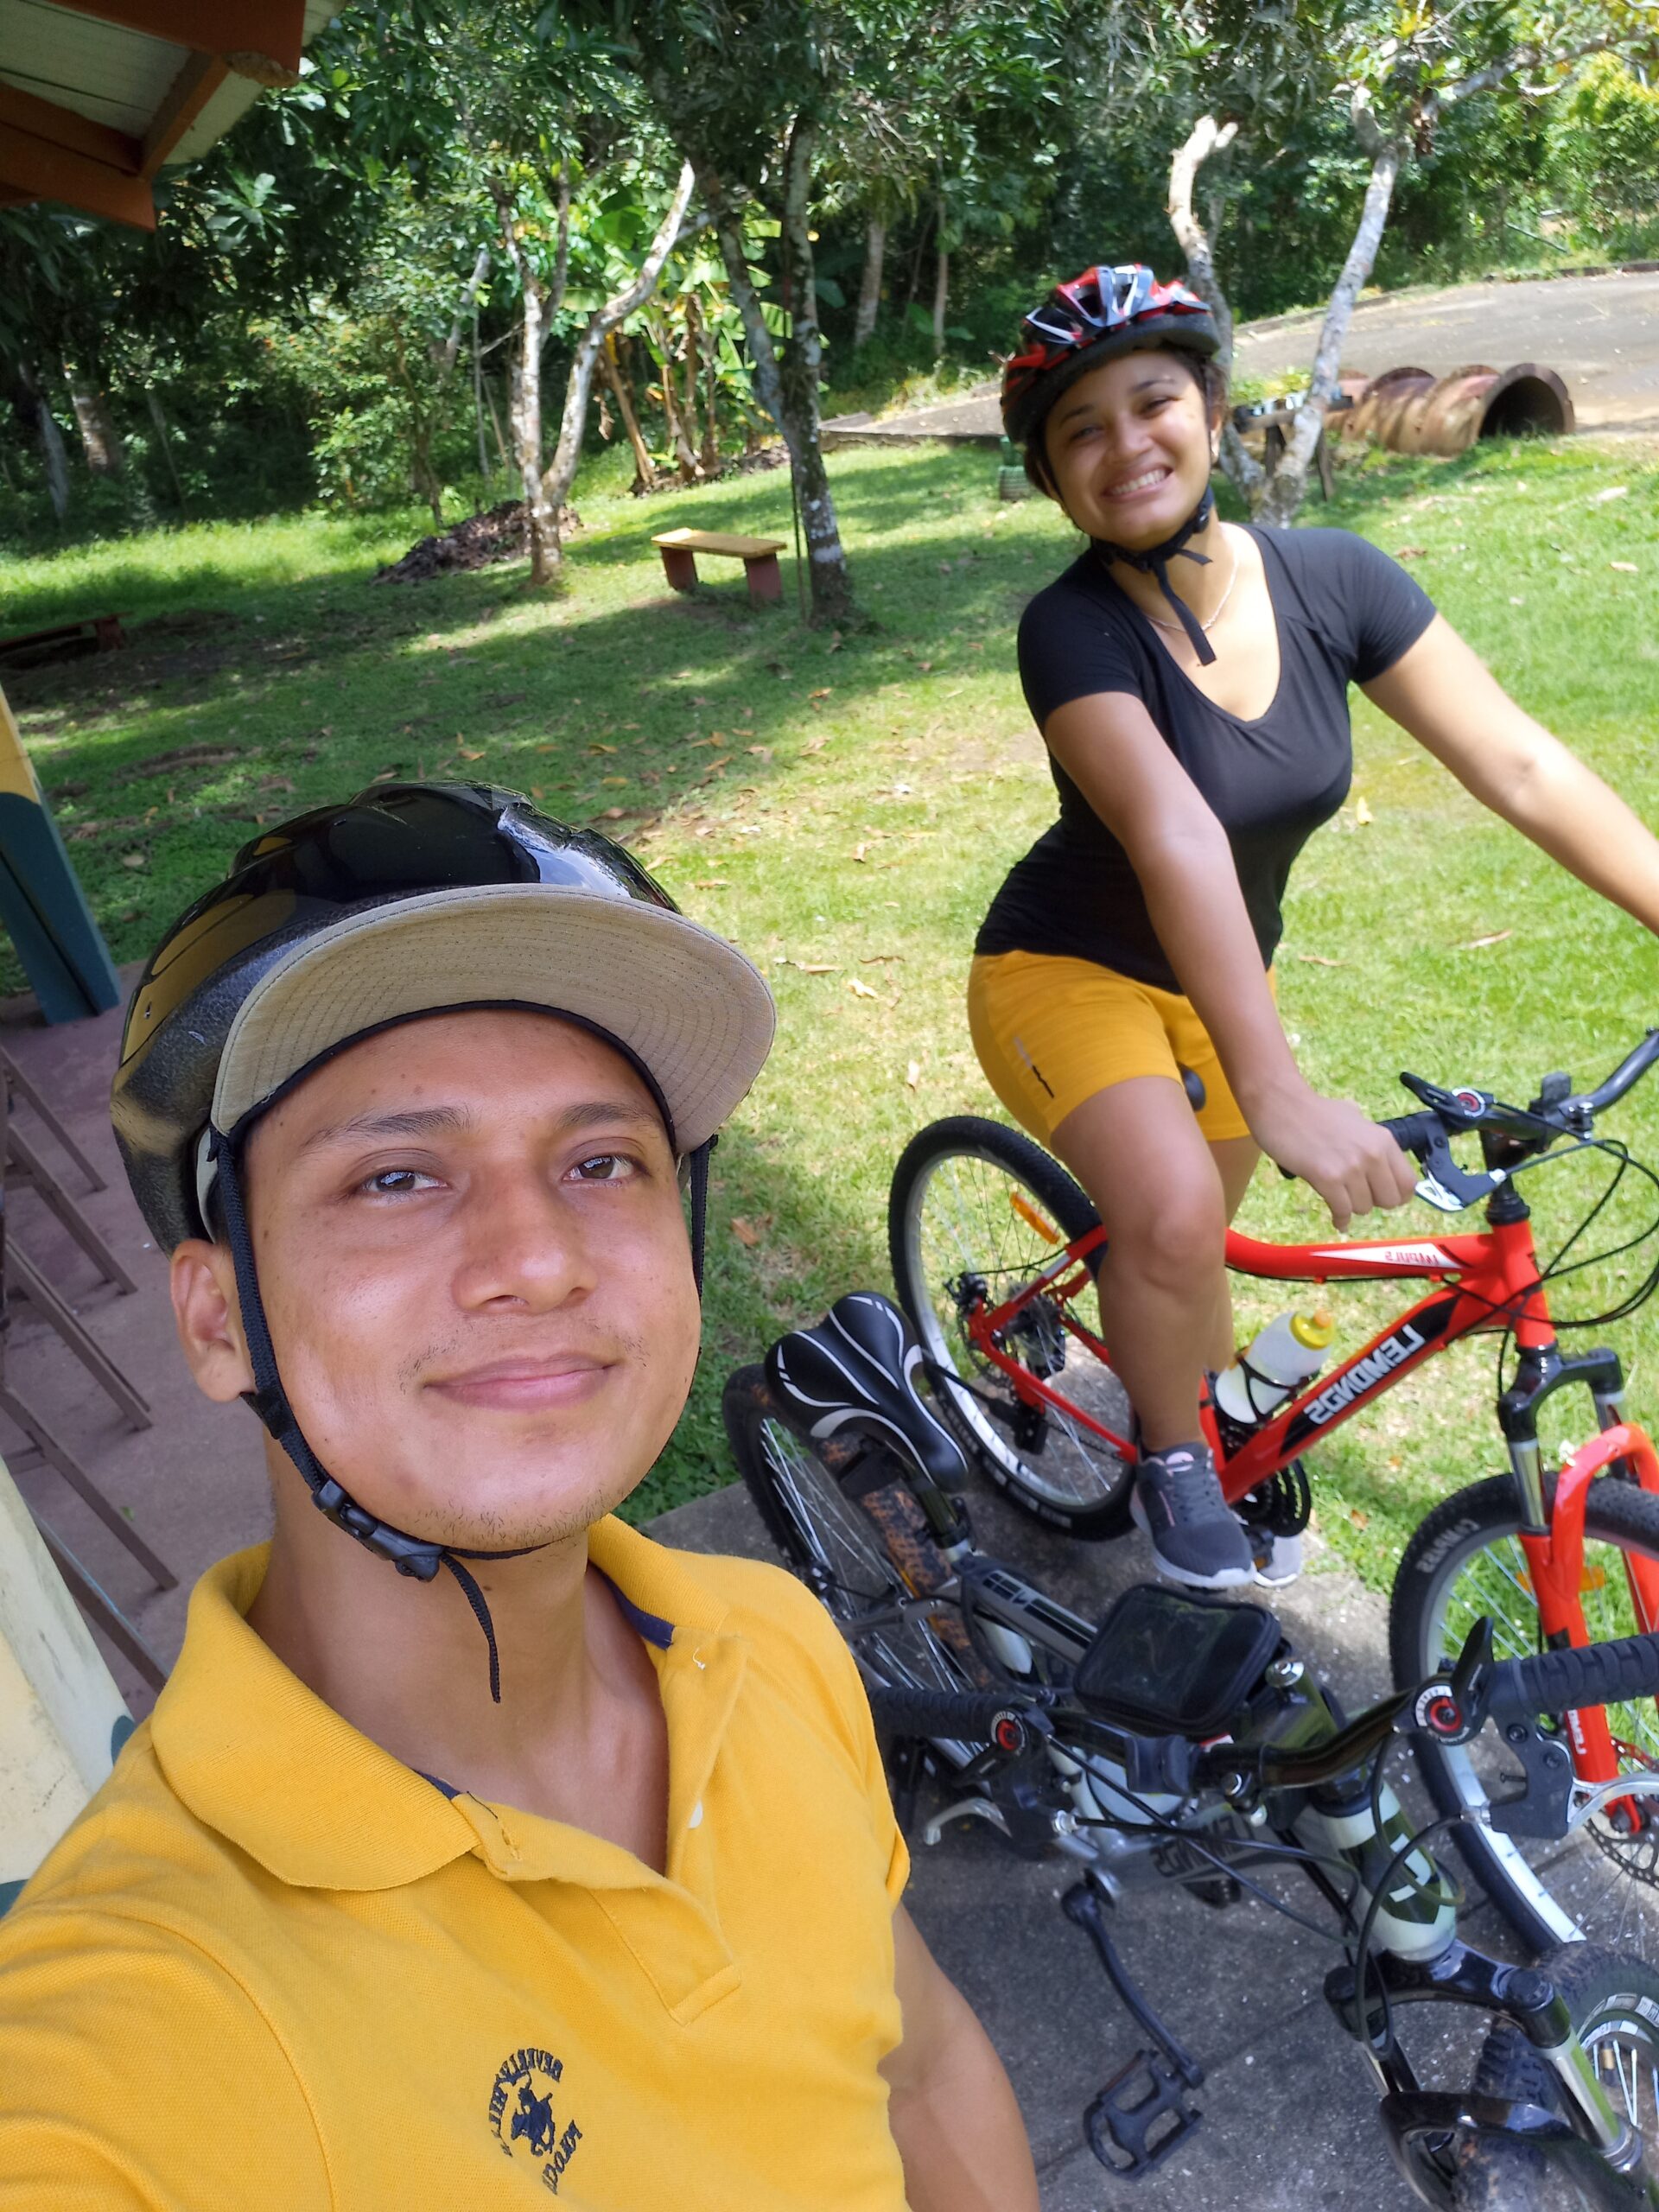 pareja en bicicleta vestida de amarillo